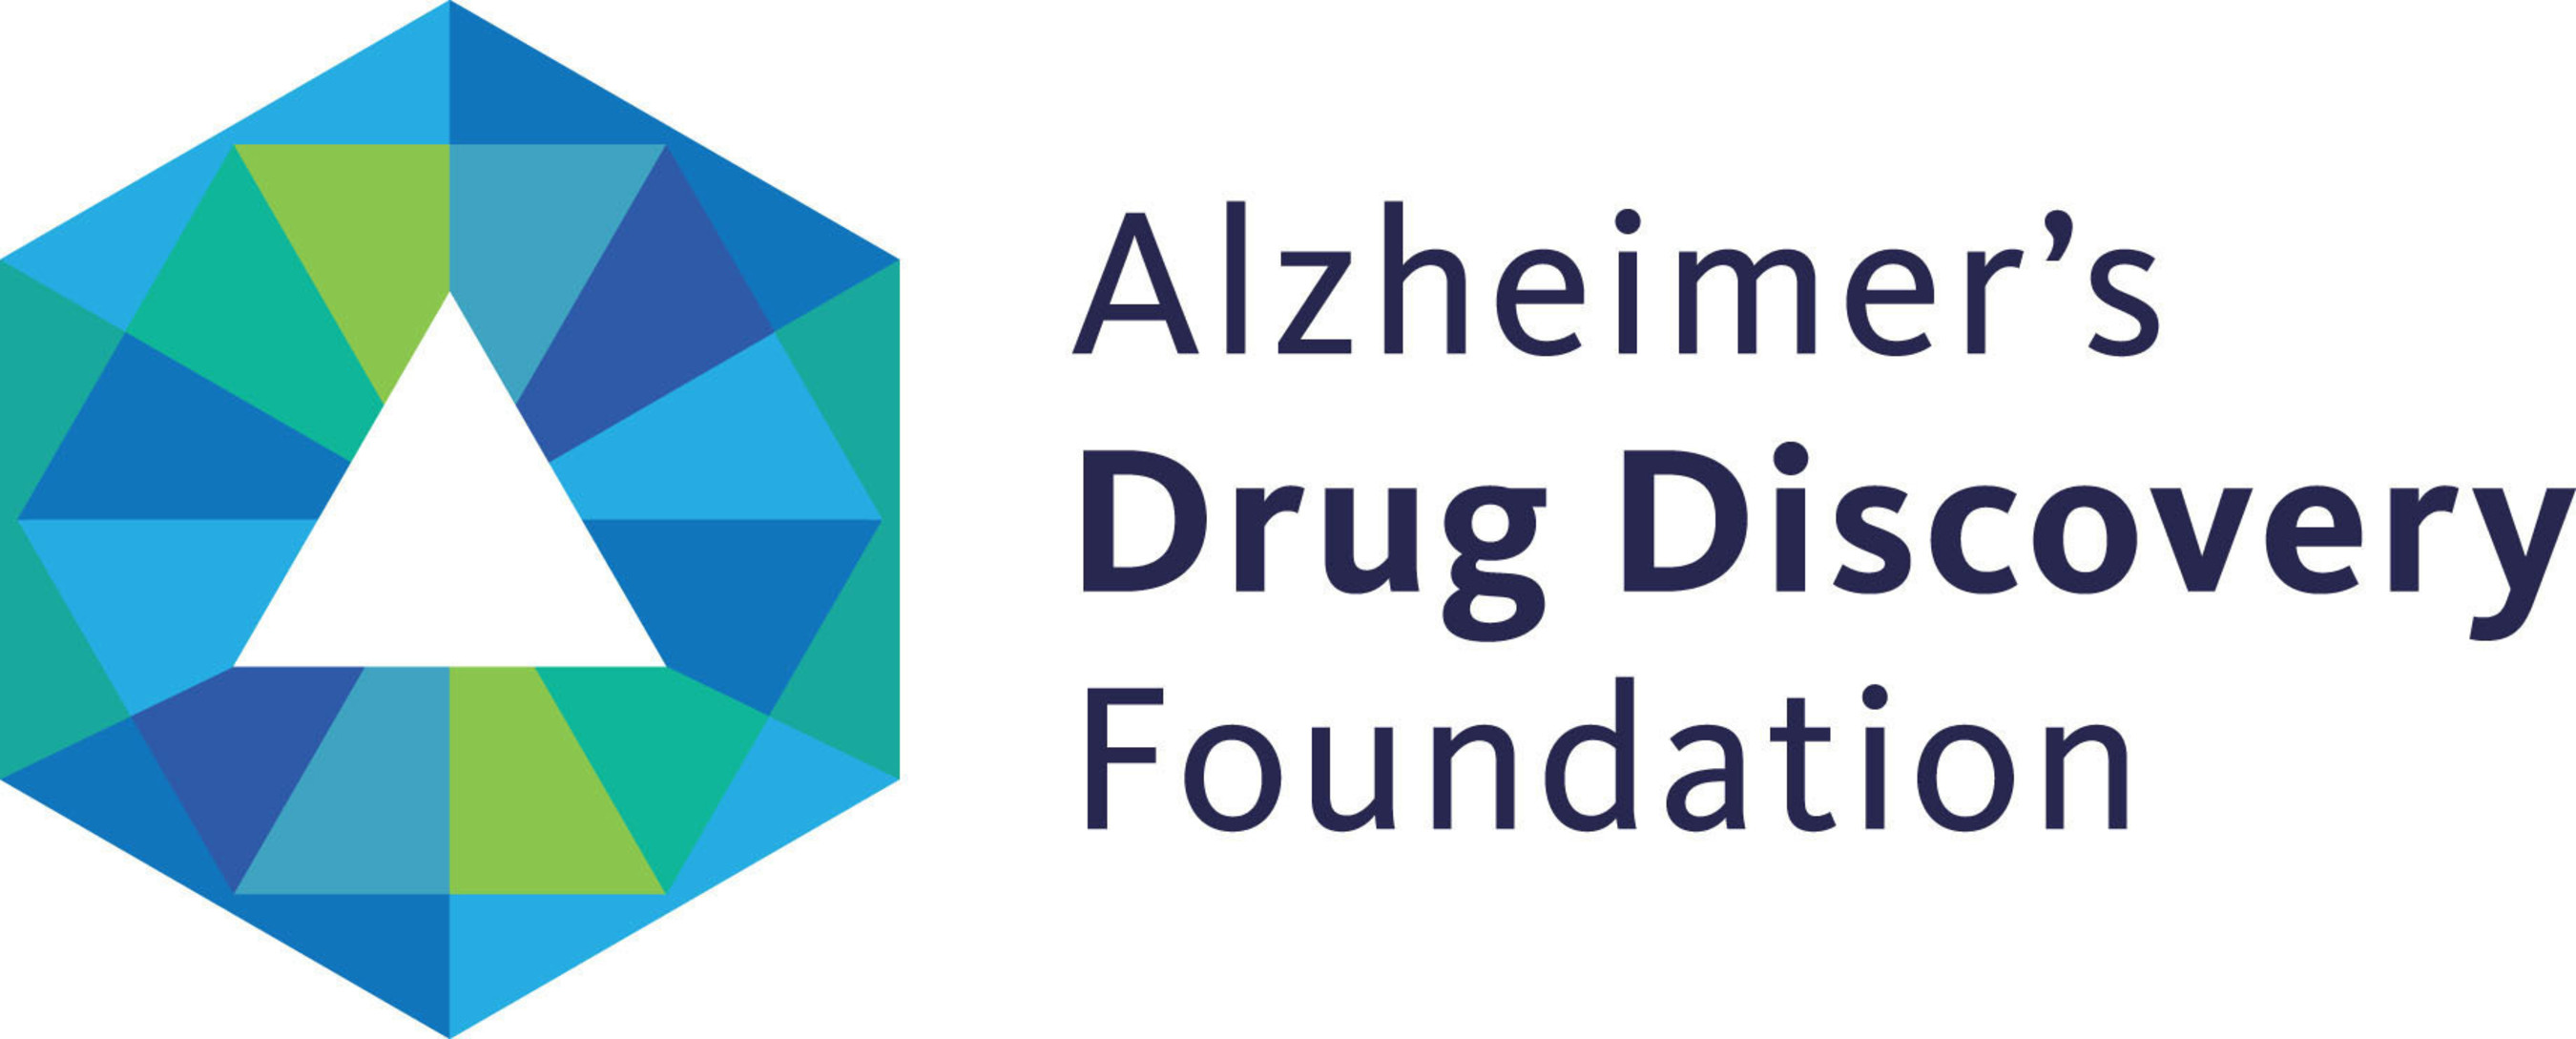 Alzheimer's Drug Discovery Foundation. (PRNewsFoto/Alzheimer's Drug Discovery Foundation) (PRNewsFoto/ALZHEIMER'S DRUG DISCOVERY...)